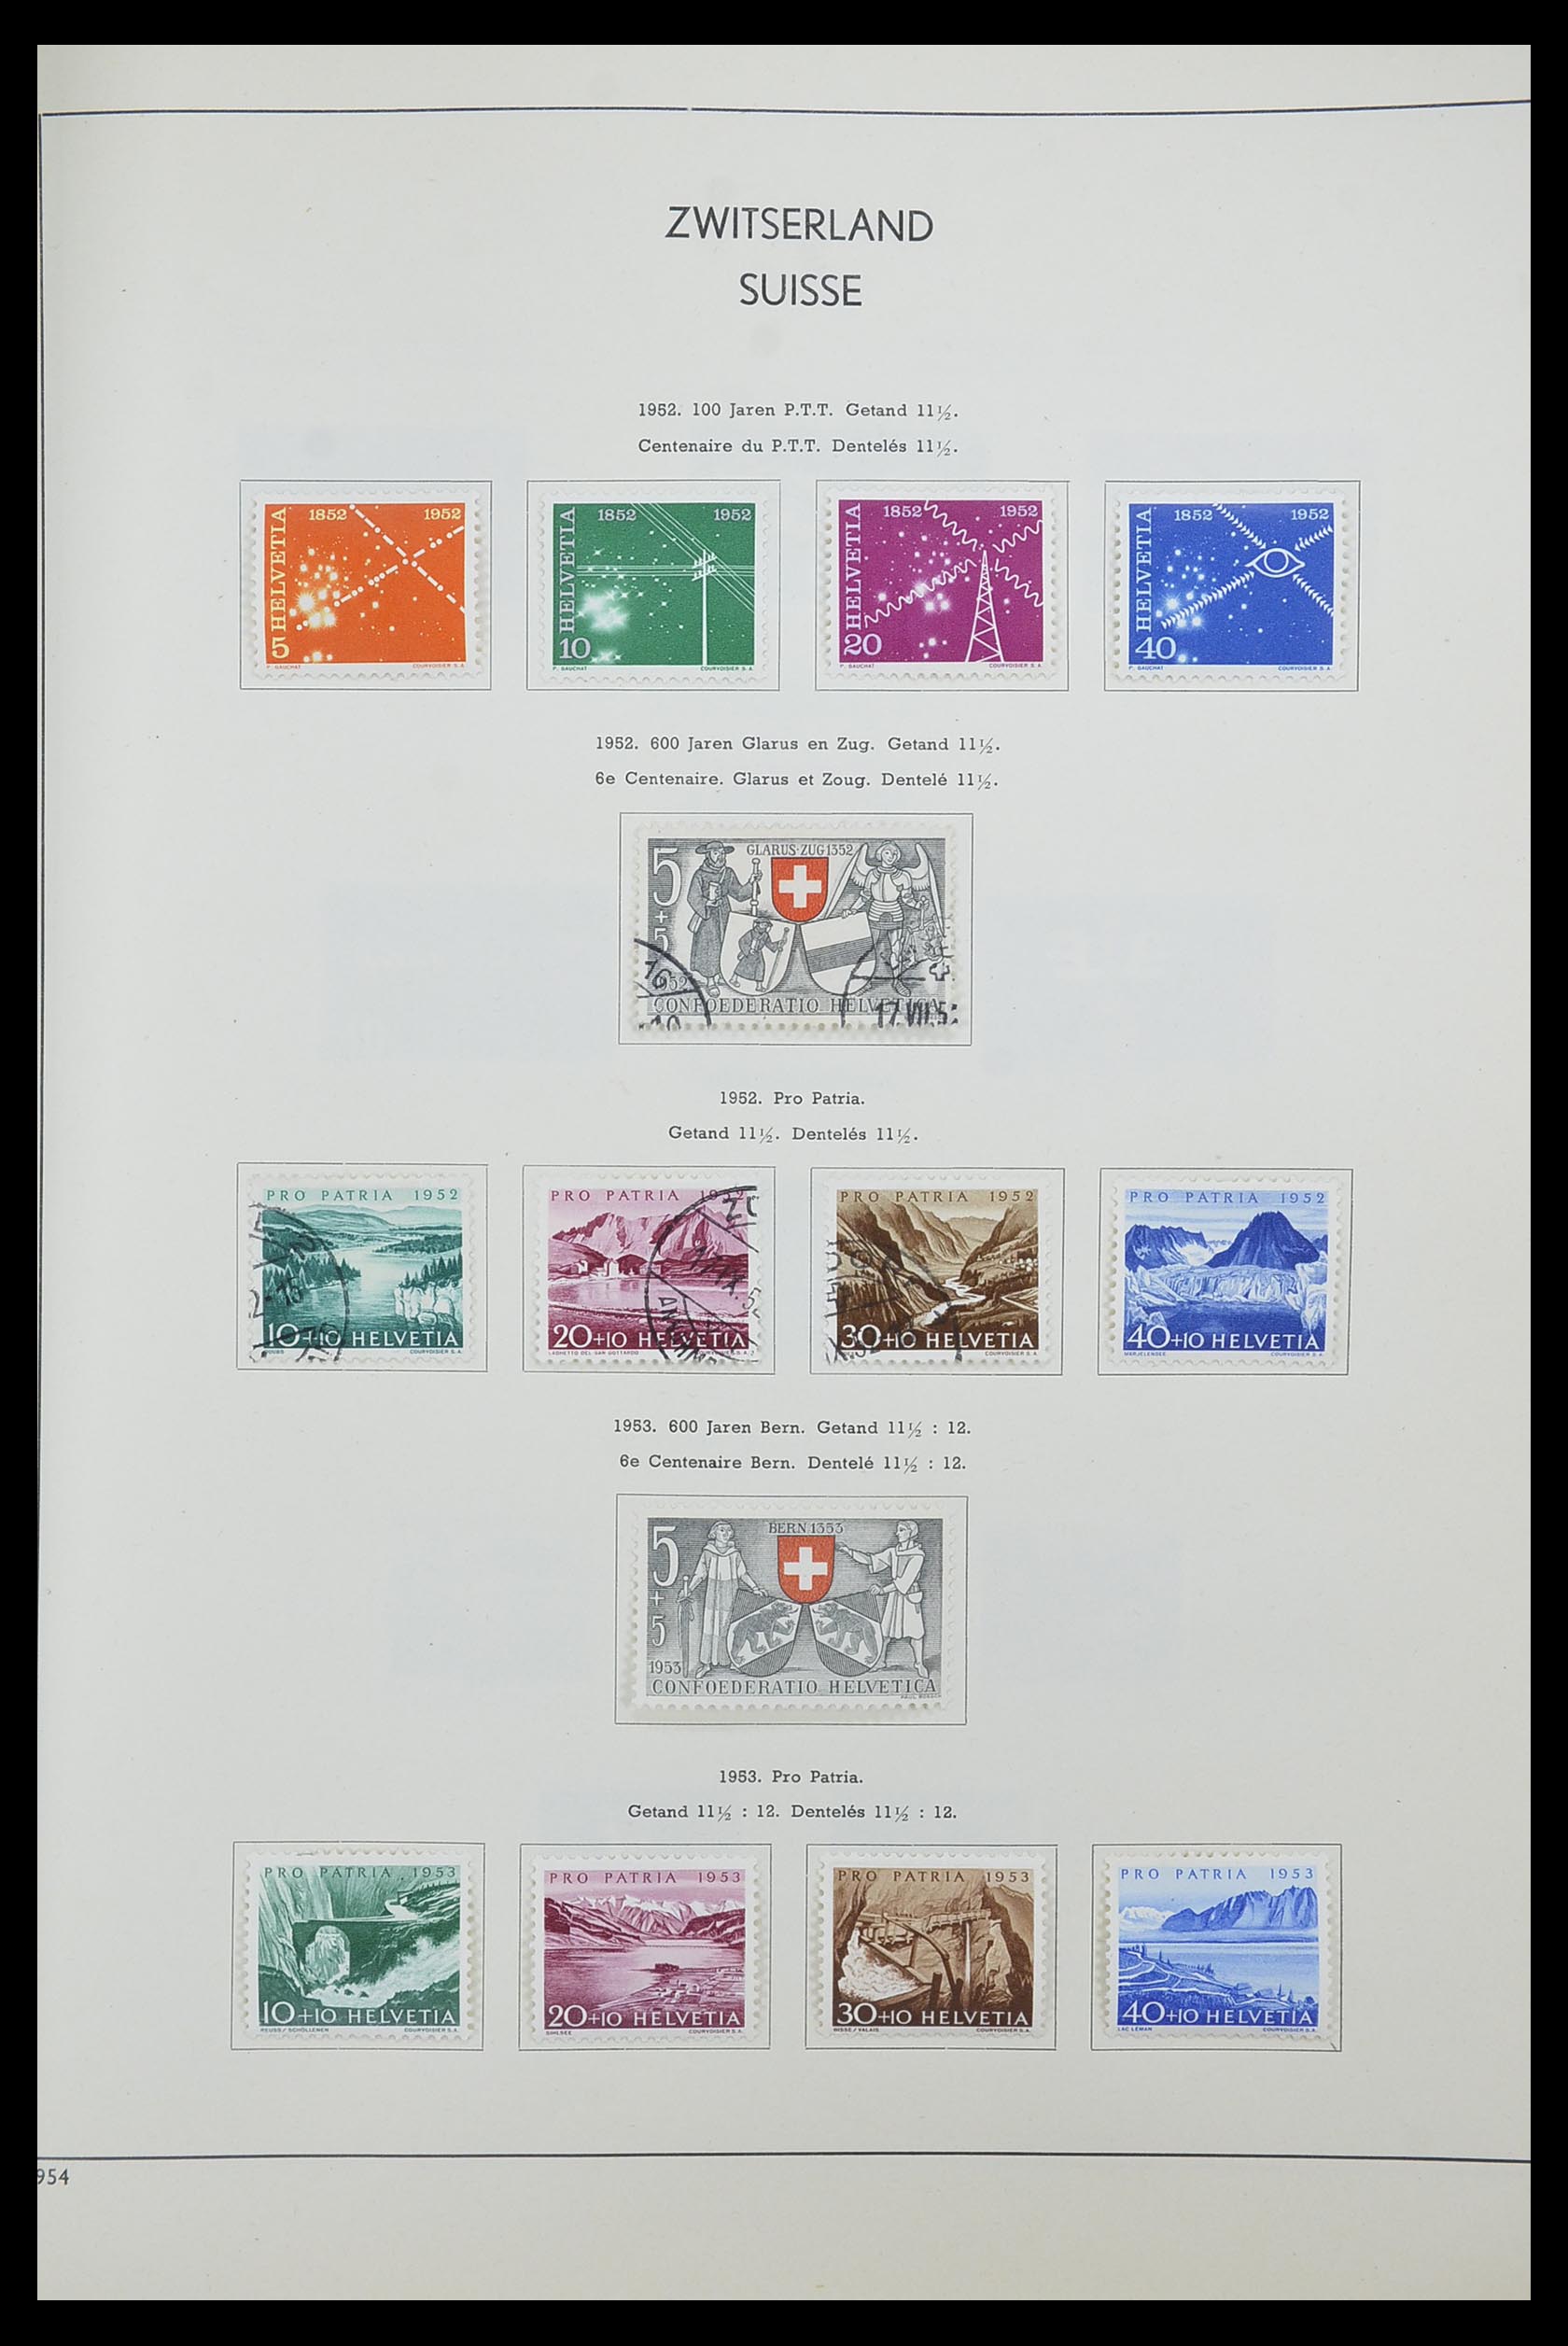 33601 029 - Stamp collection 33601 Switzerland 1854-1985.